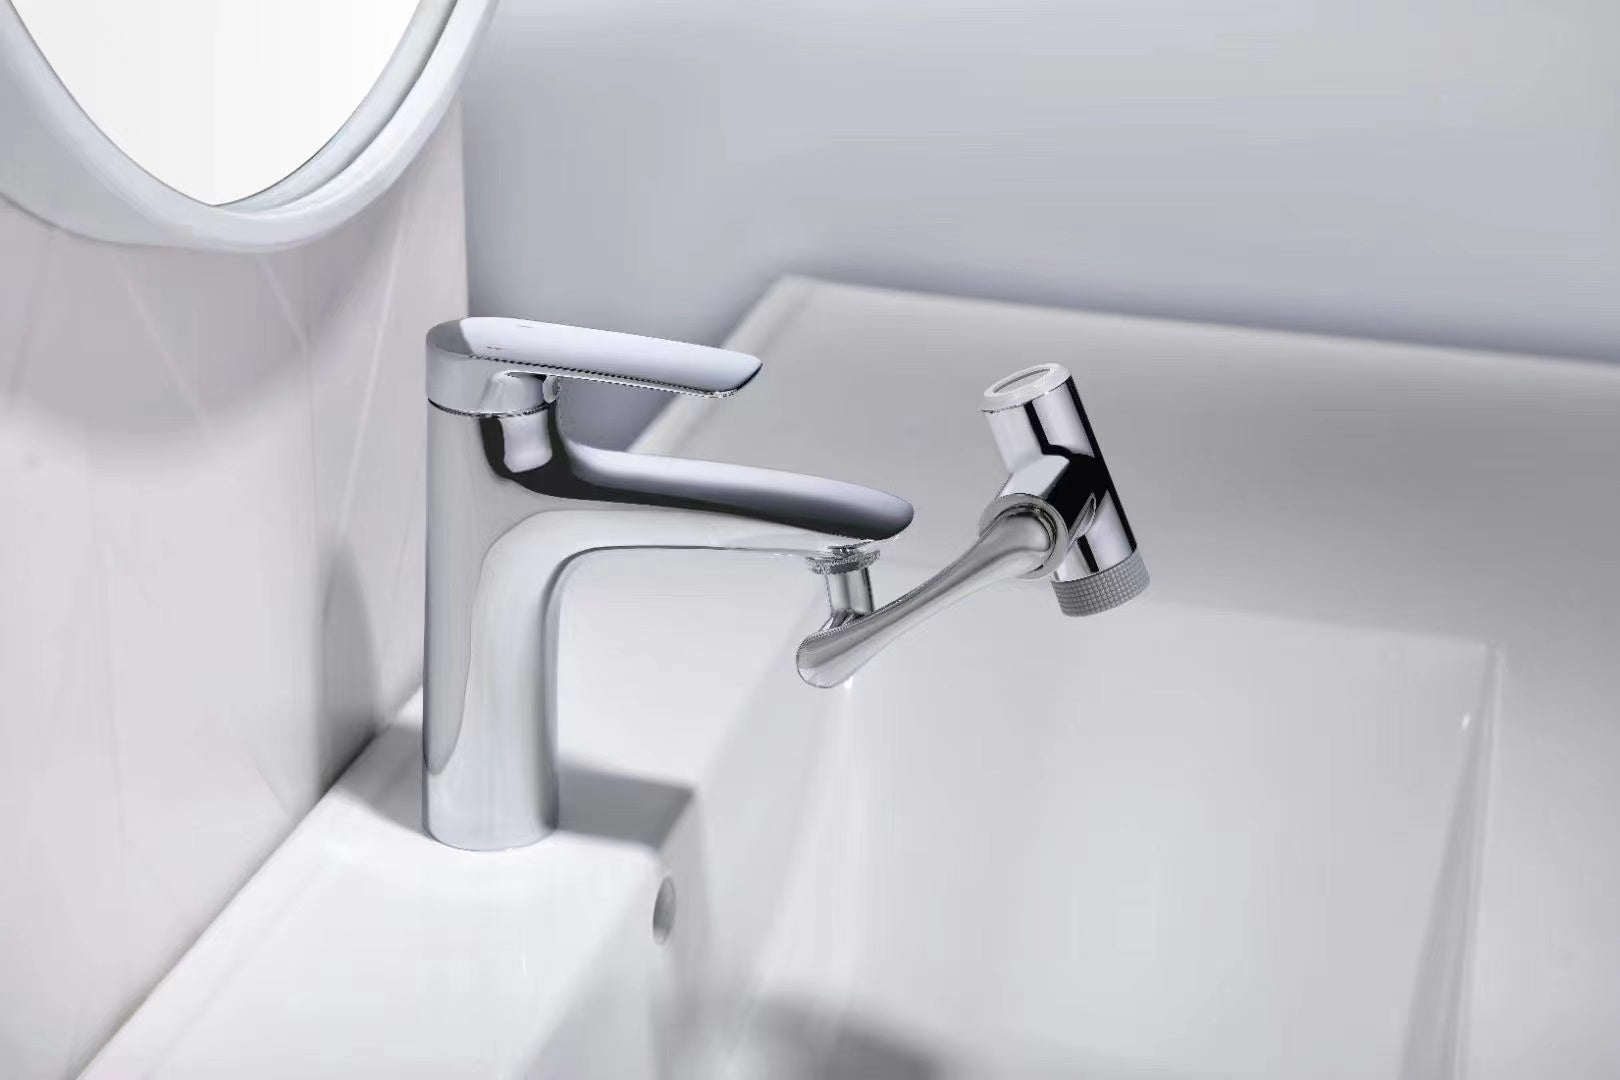 Smart Bathroom Faucet with Temperature Display